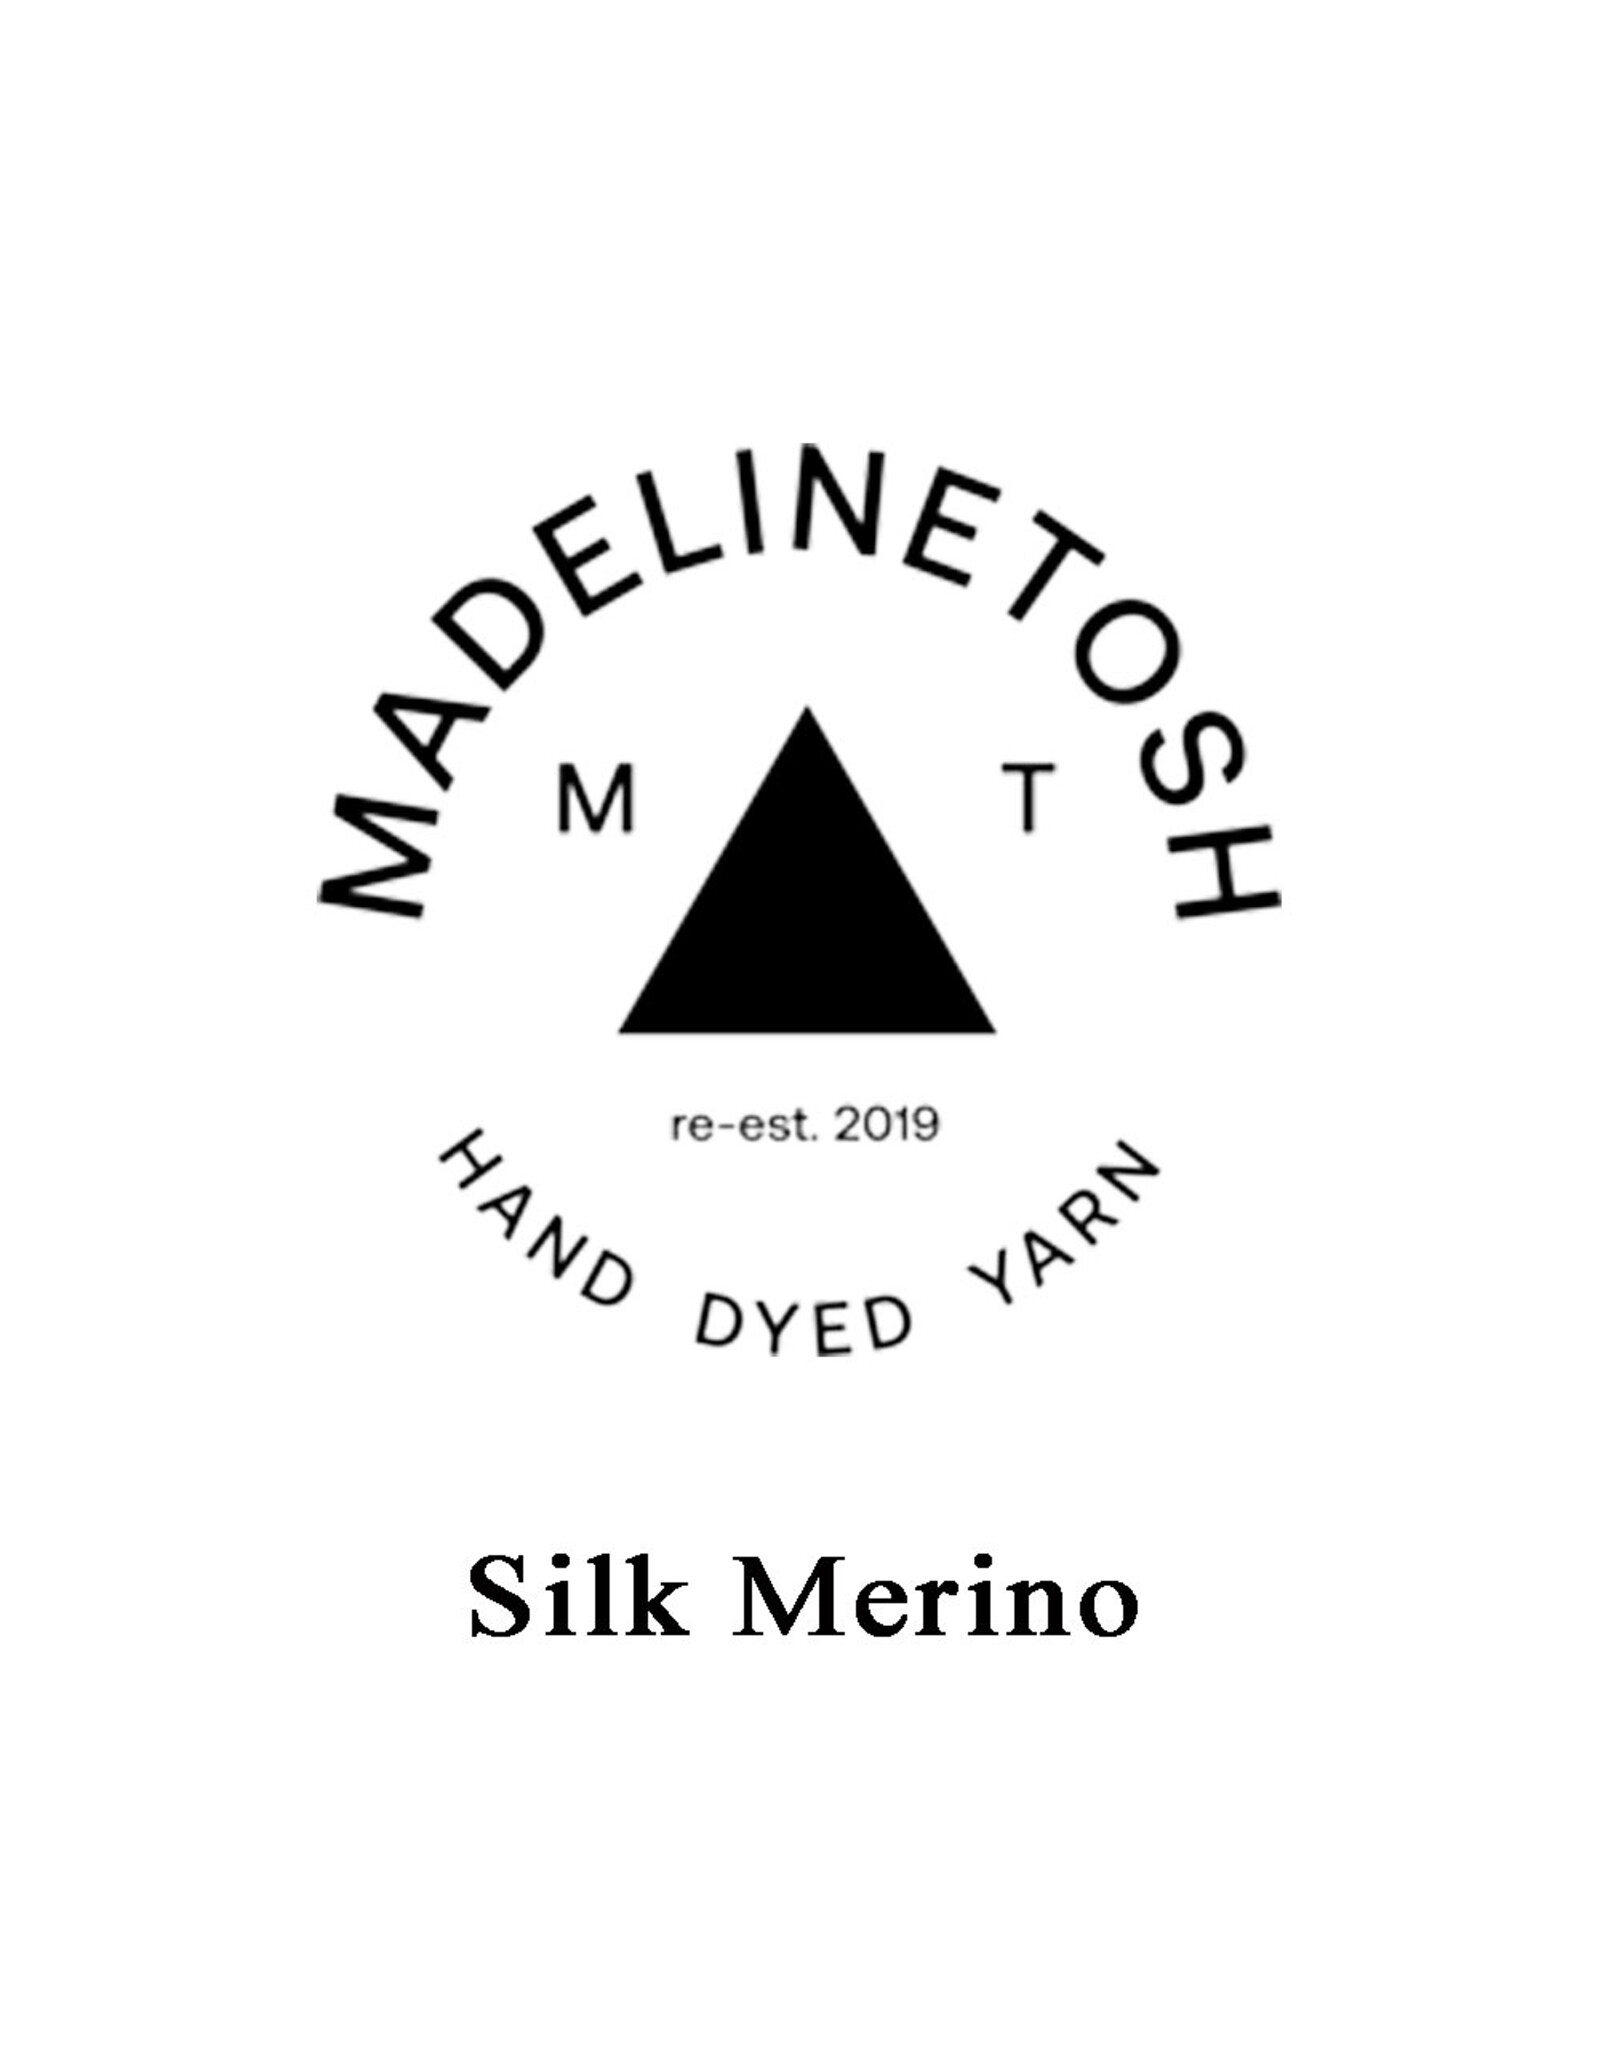 Madelinetosh Tosh Silk Cloud